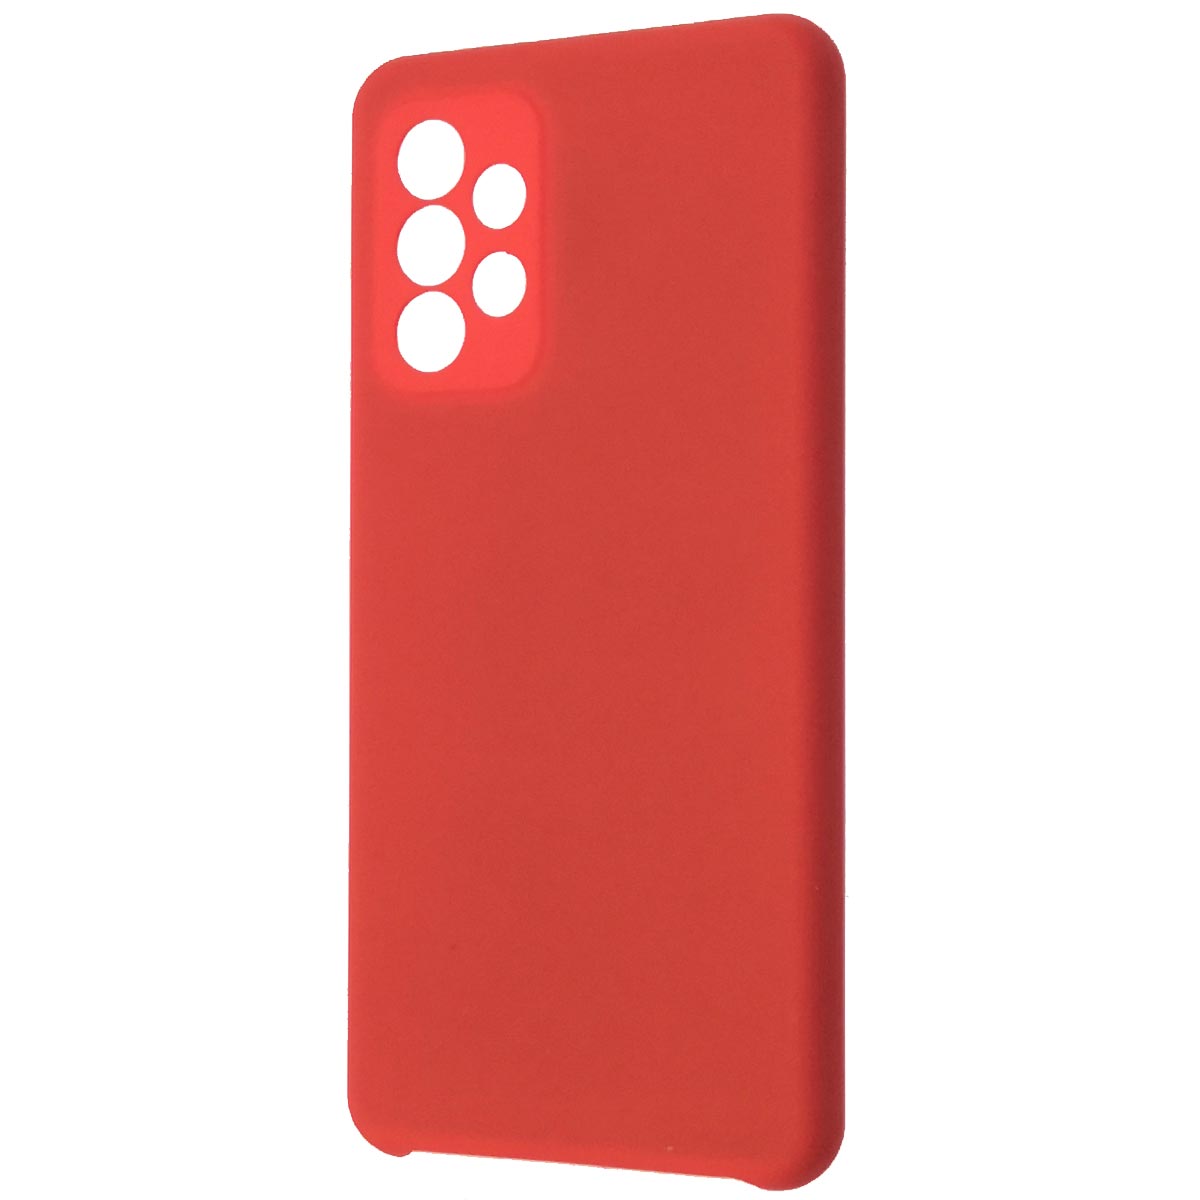 Чехол накладка Silicon Cover для SAMSUNG Galaxy A52 (SM-A525F), силикон, бархат, цвет красный